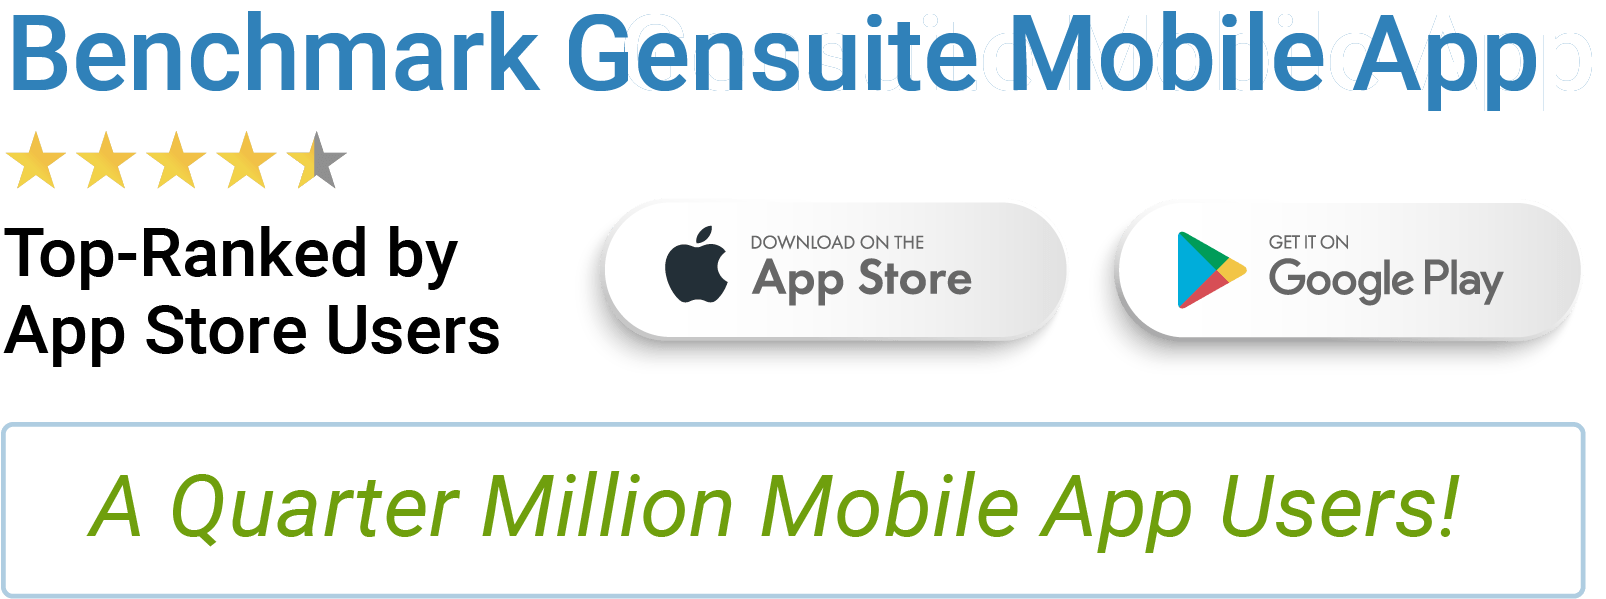 Benchmark Gensuite Mobile App